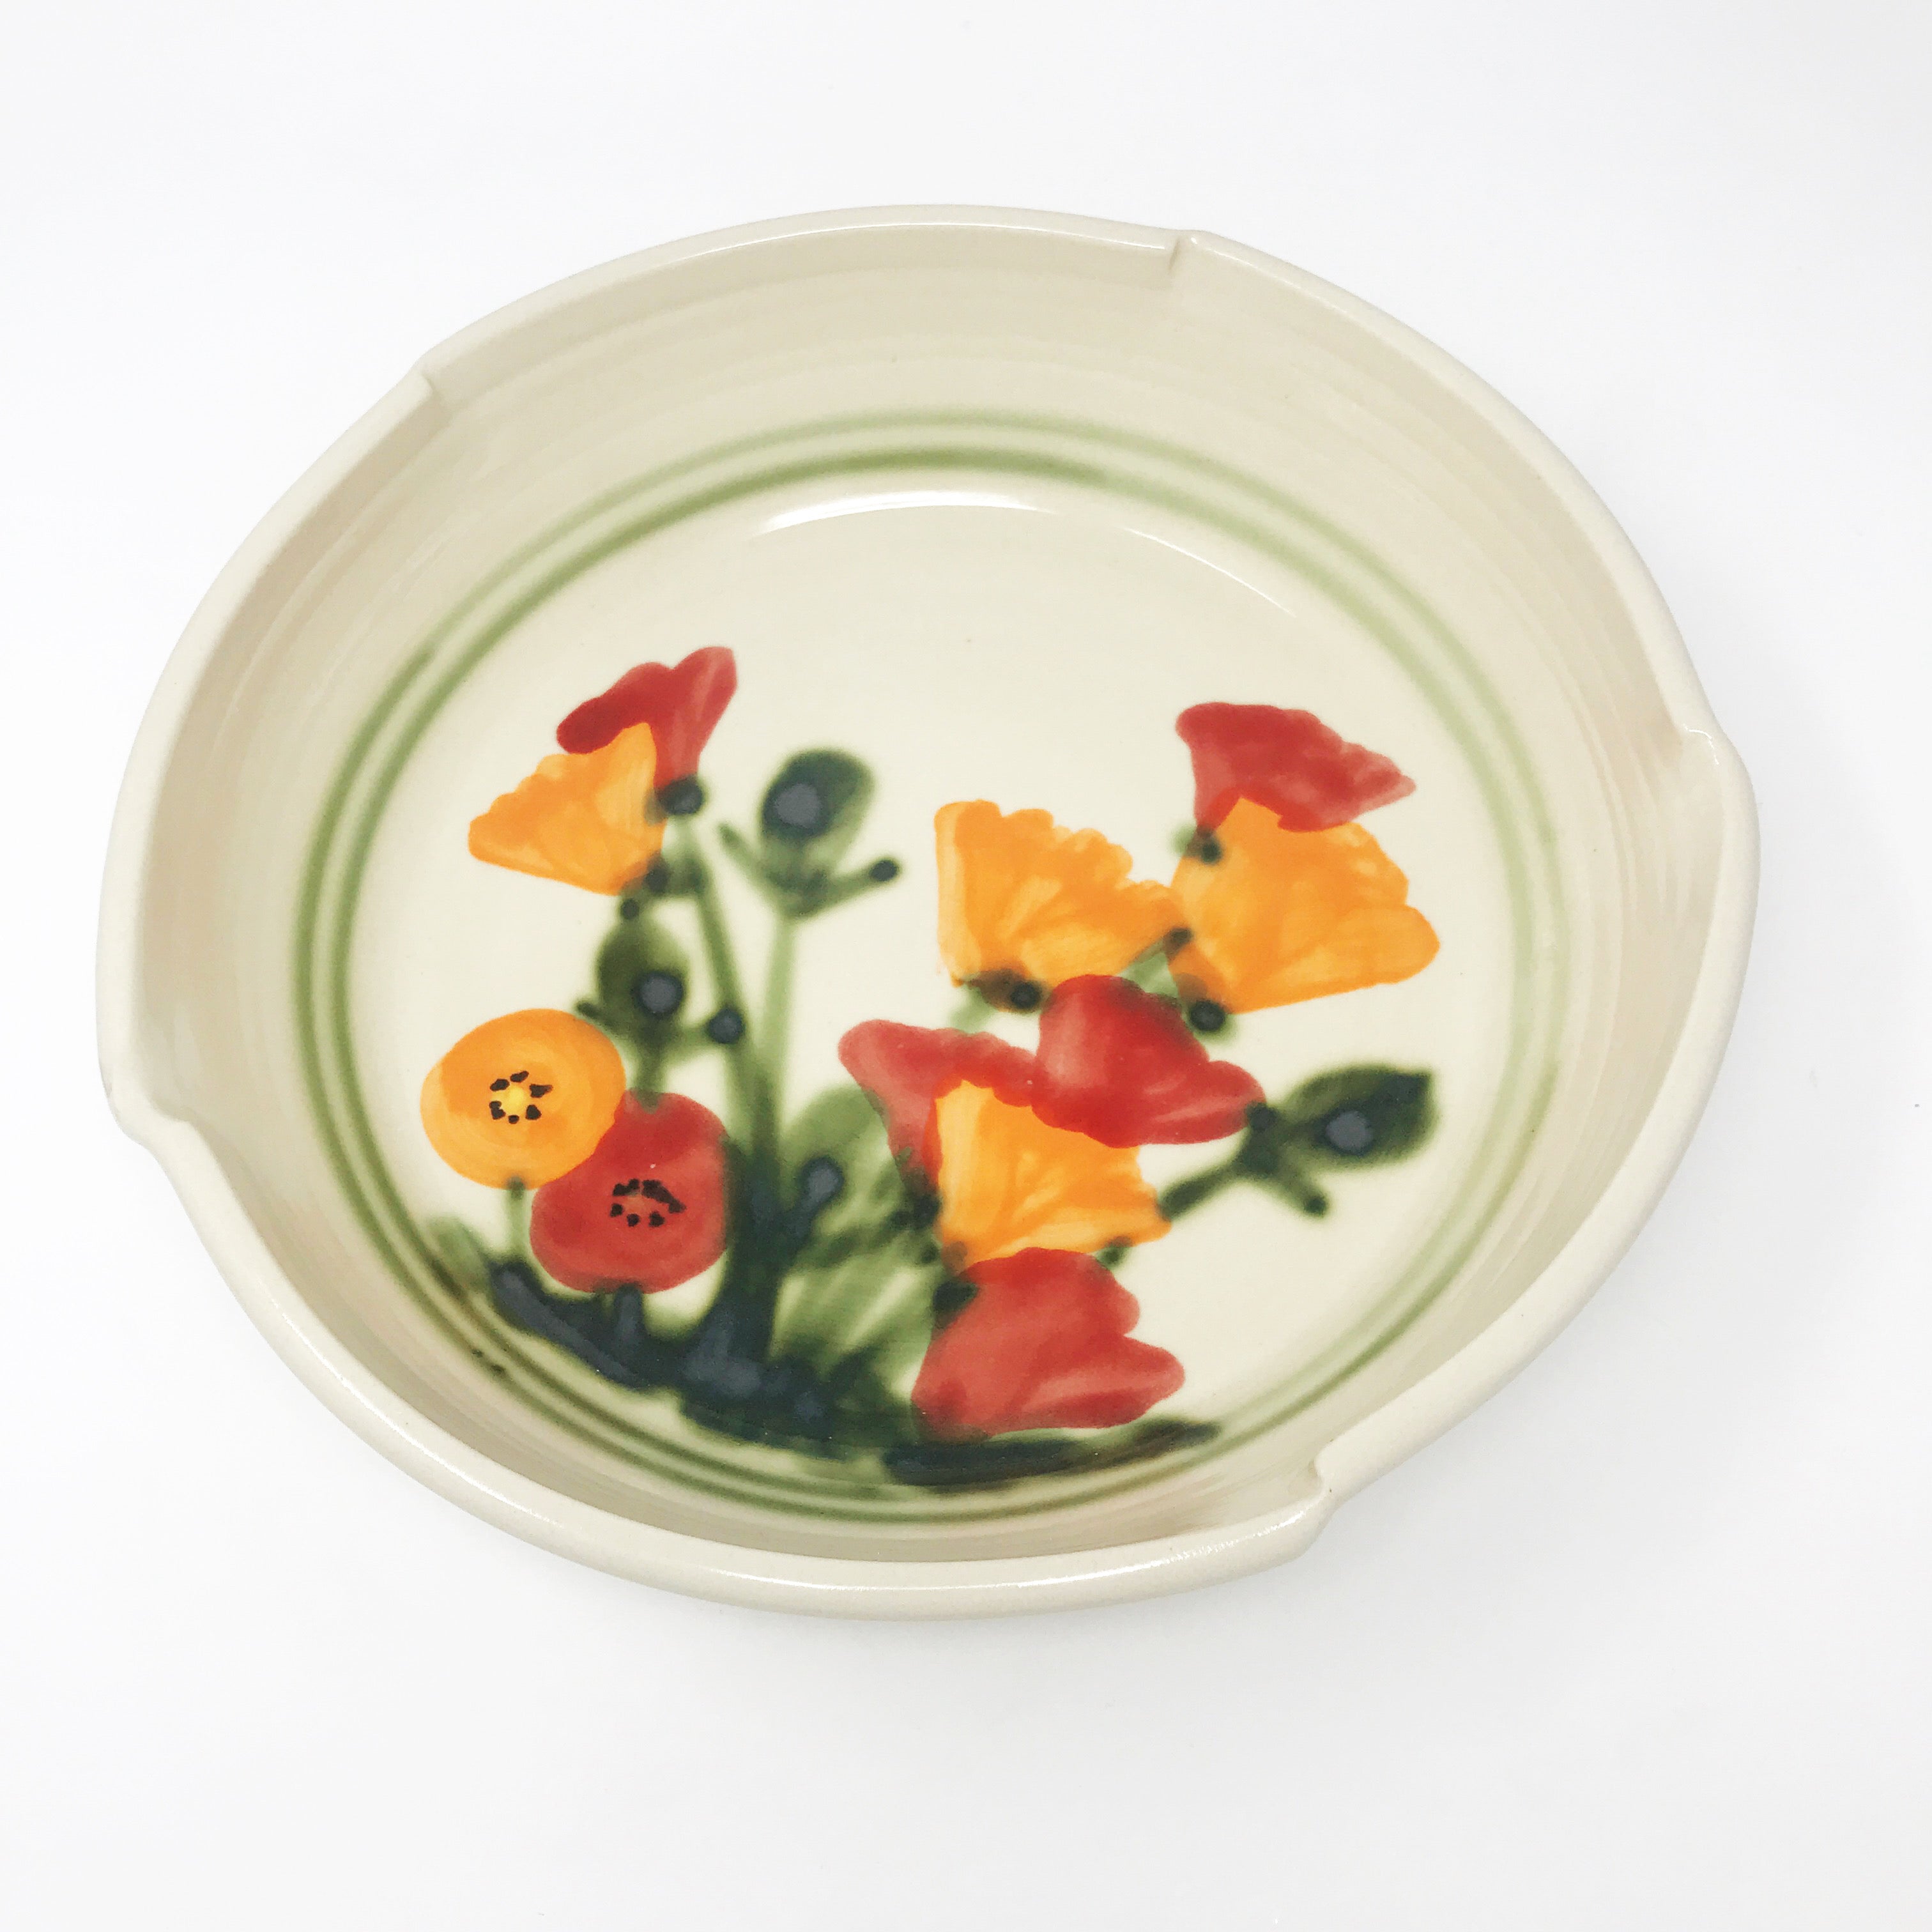 handmade ceramic pasta bowl with poppies